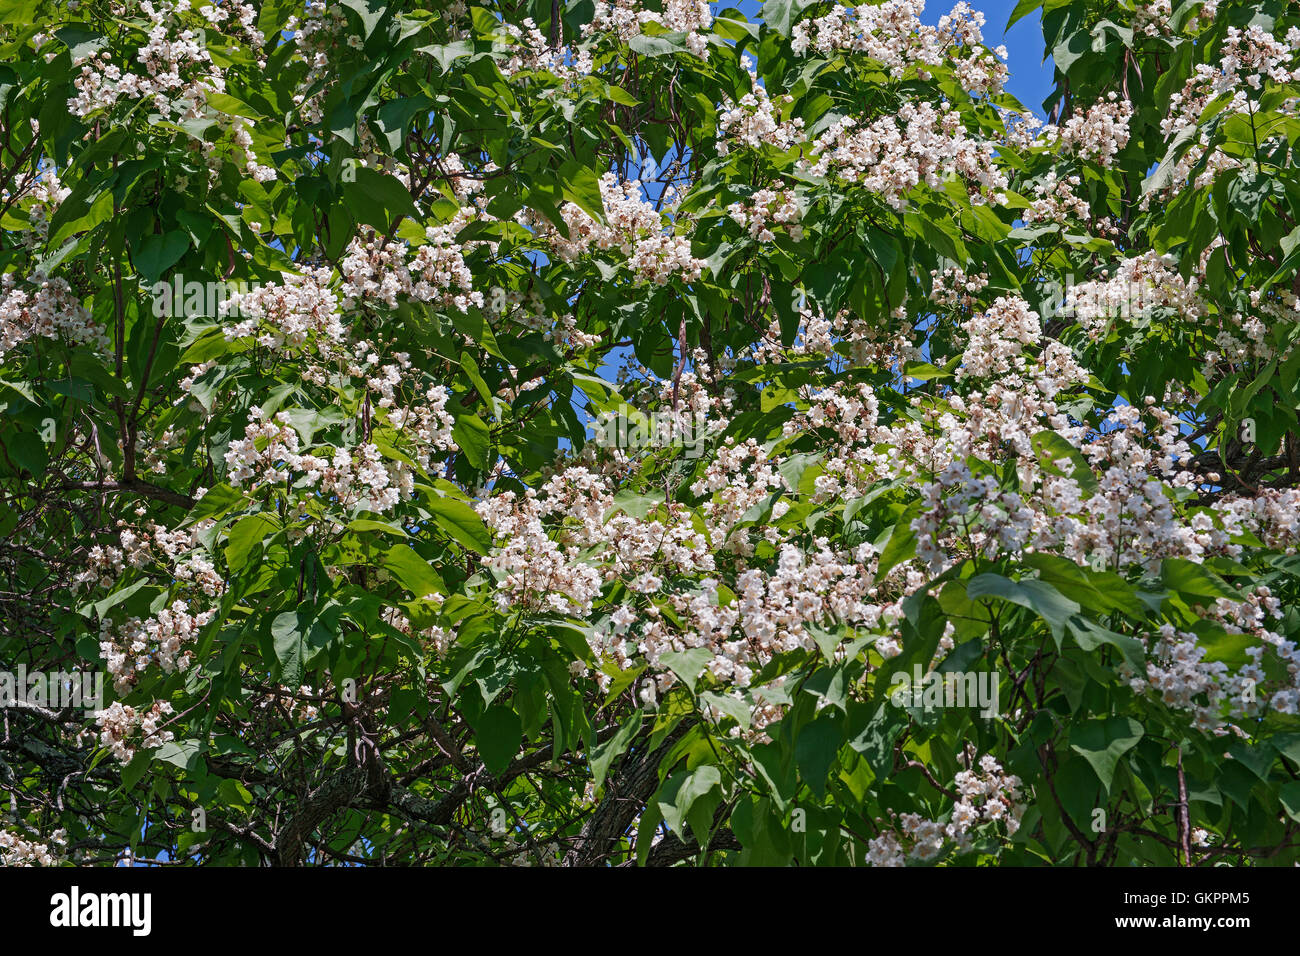 Northern catalpa tree in blossom Stock Photo